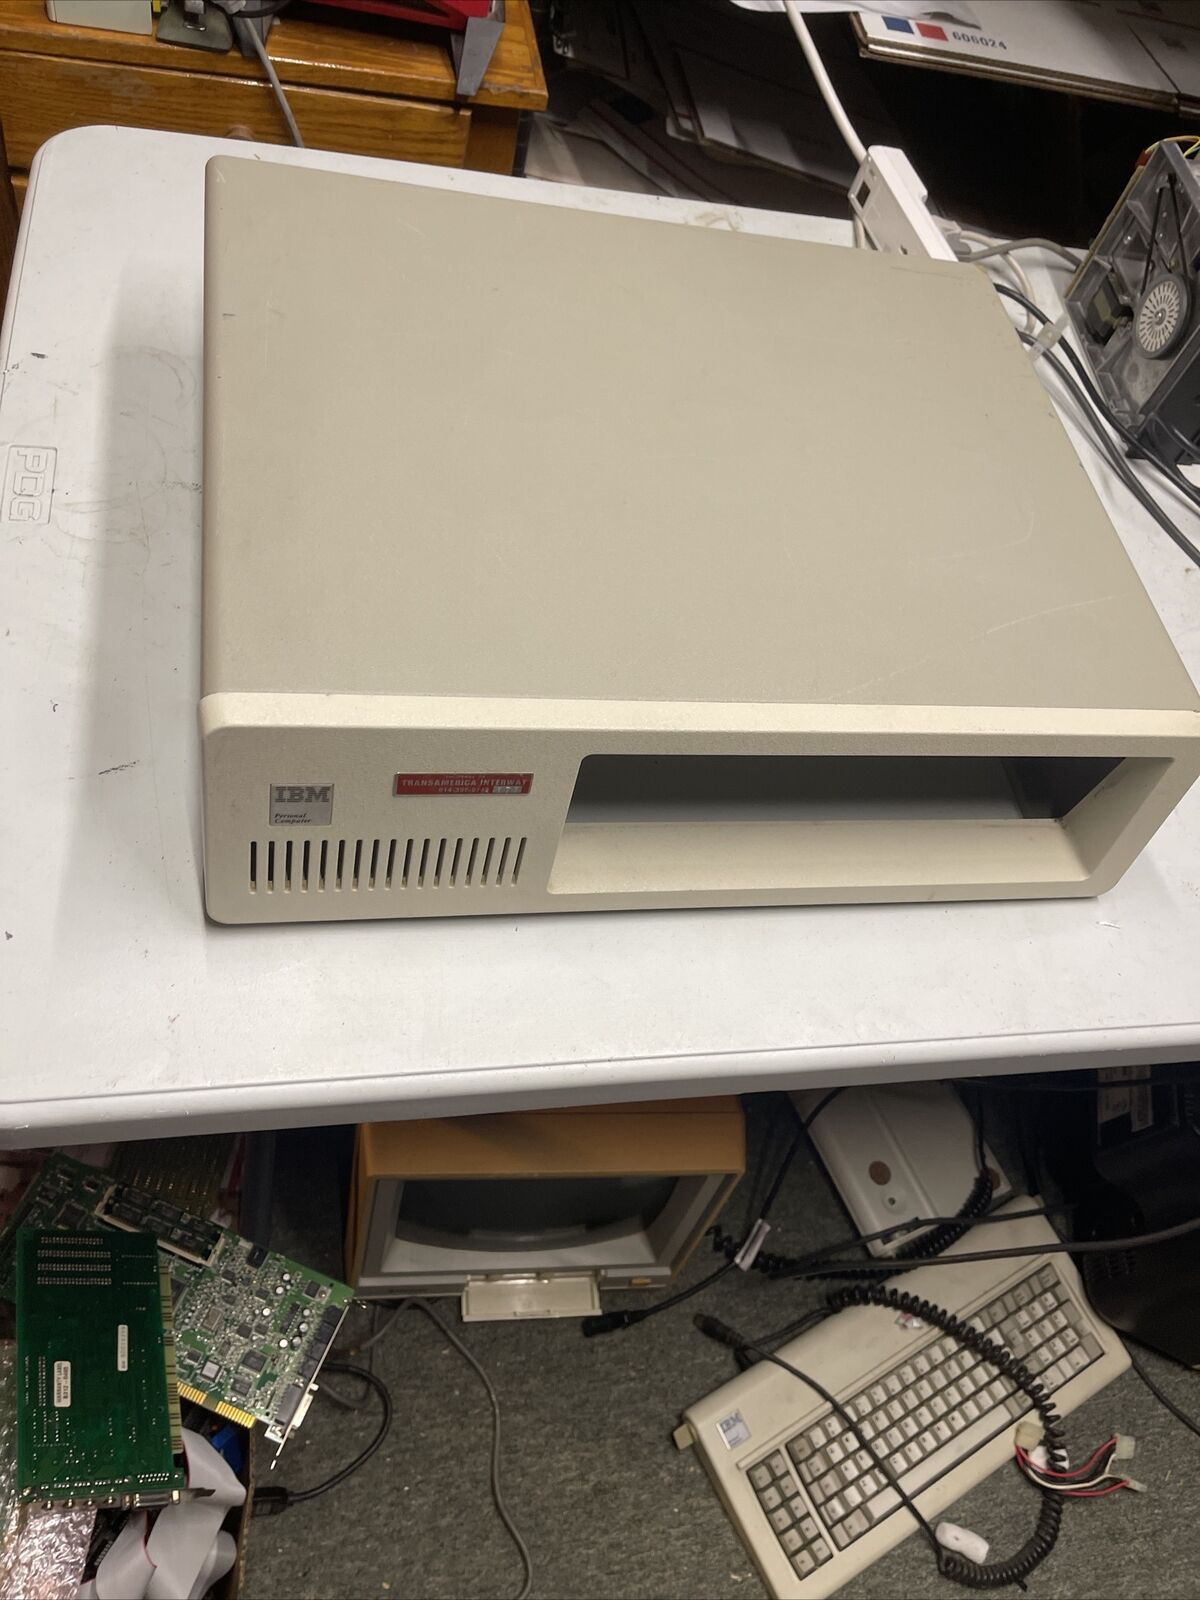 Vintage IBM 5150 Case empty PC Personal Computer retro build w screws